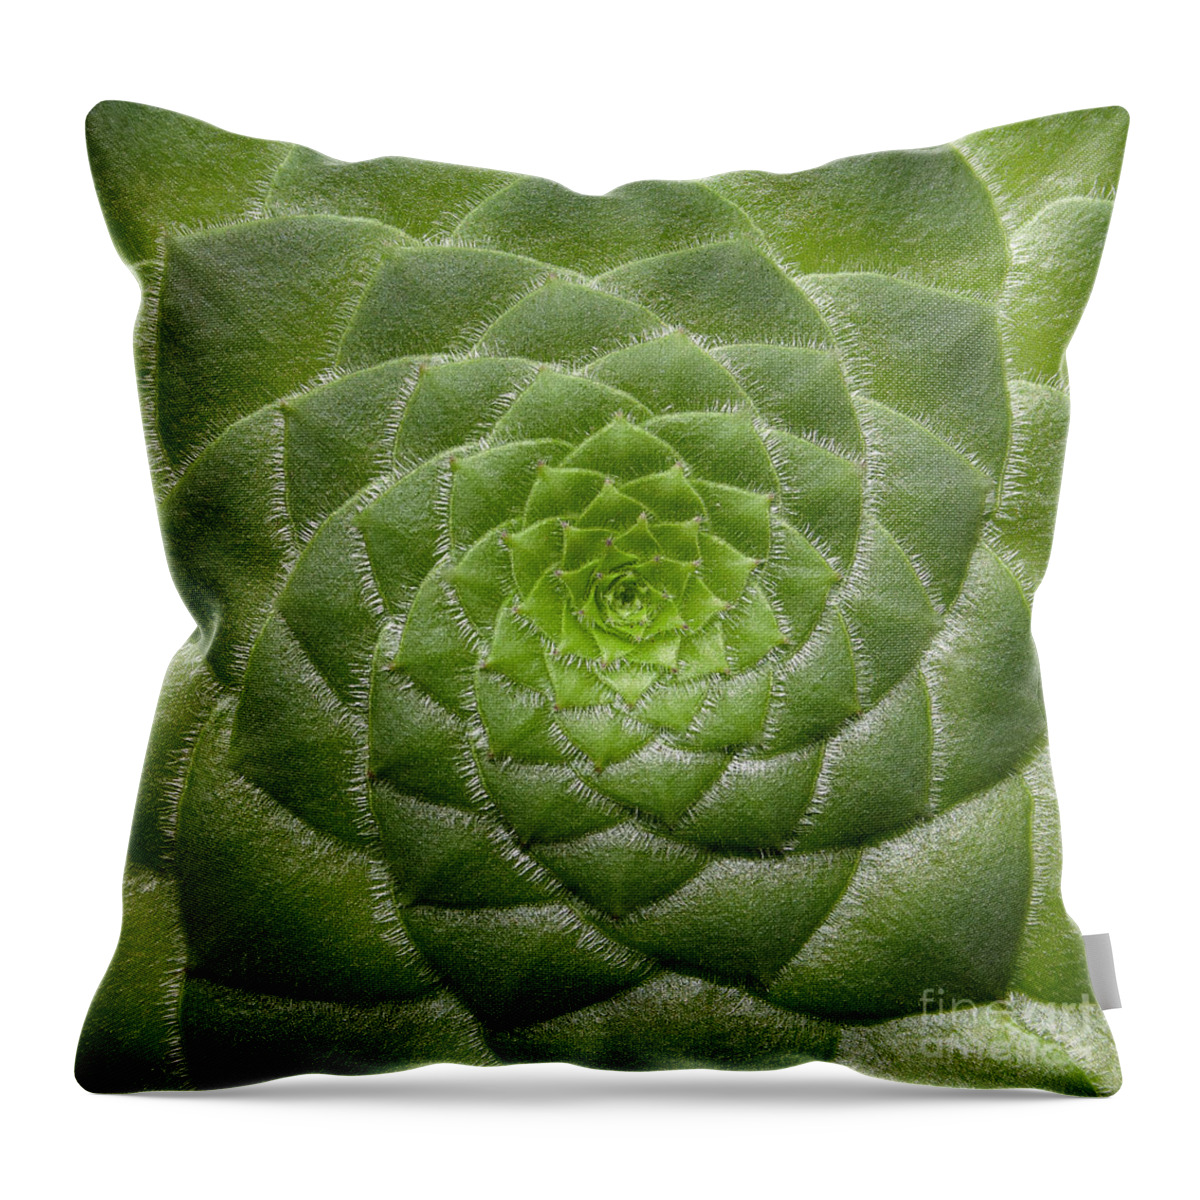 203 Throw Pillow featuring the photograph Artistic Nature Green Aeonium Cactus Macro Photo 203 by Ricardos Creations